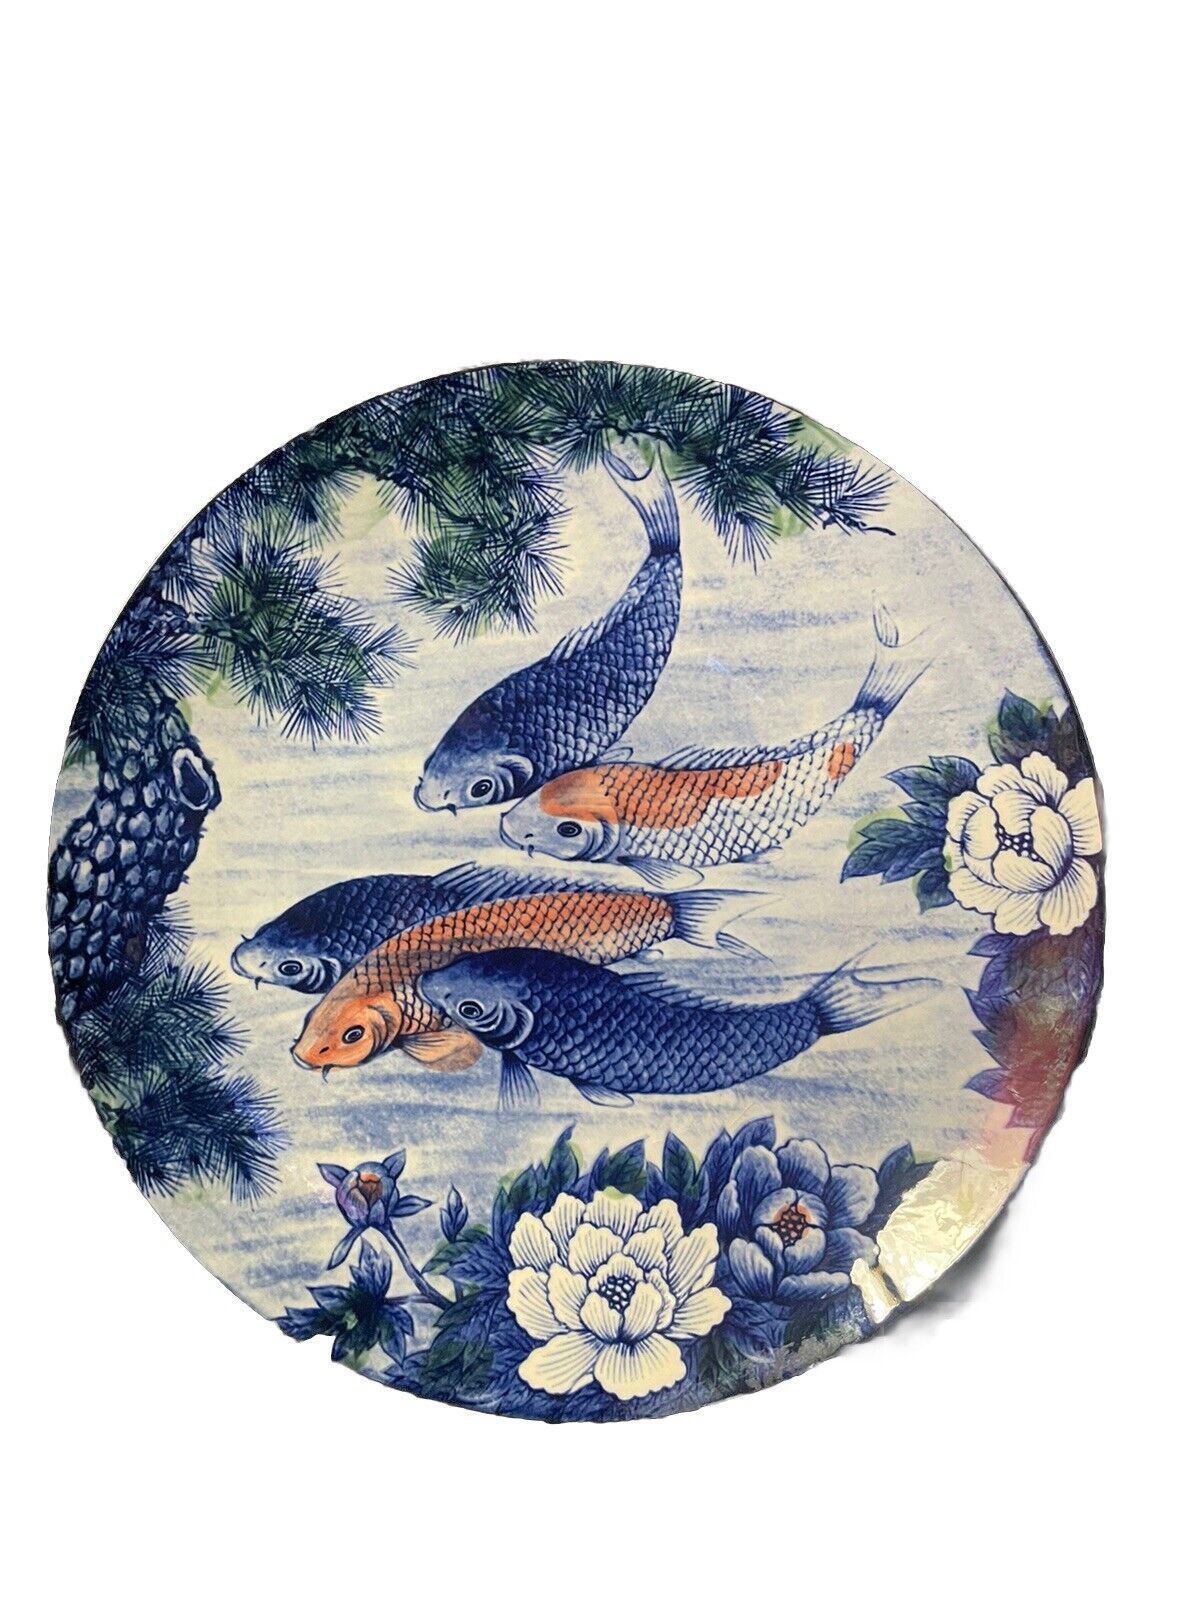 Vintage Japanese Sun Ceramics, Blue White Koi Fish, Porcelain Charger Plate 12”